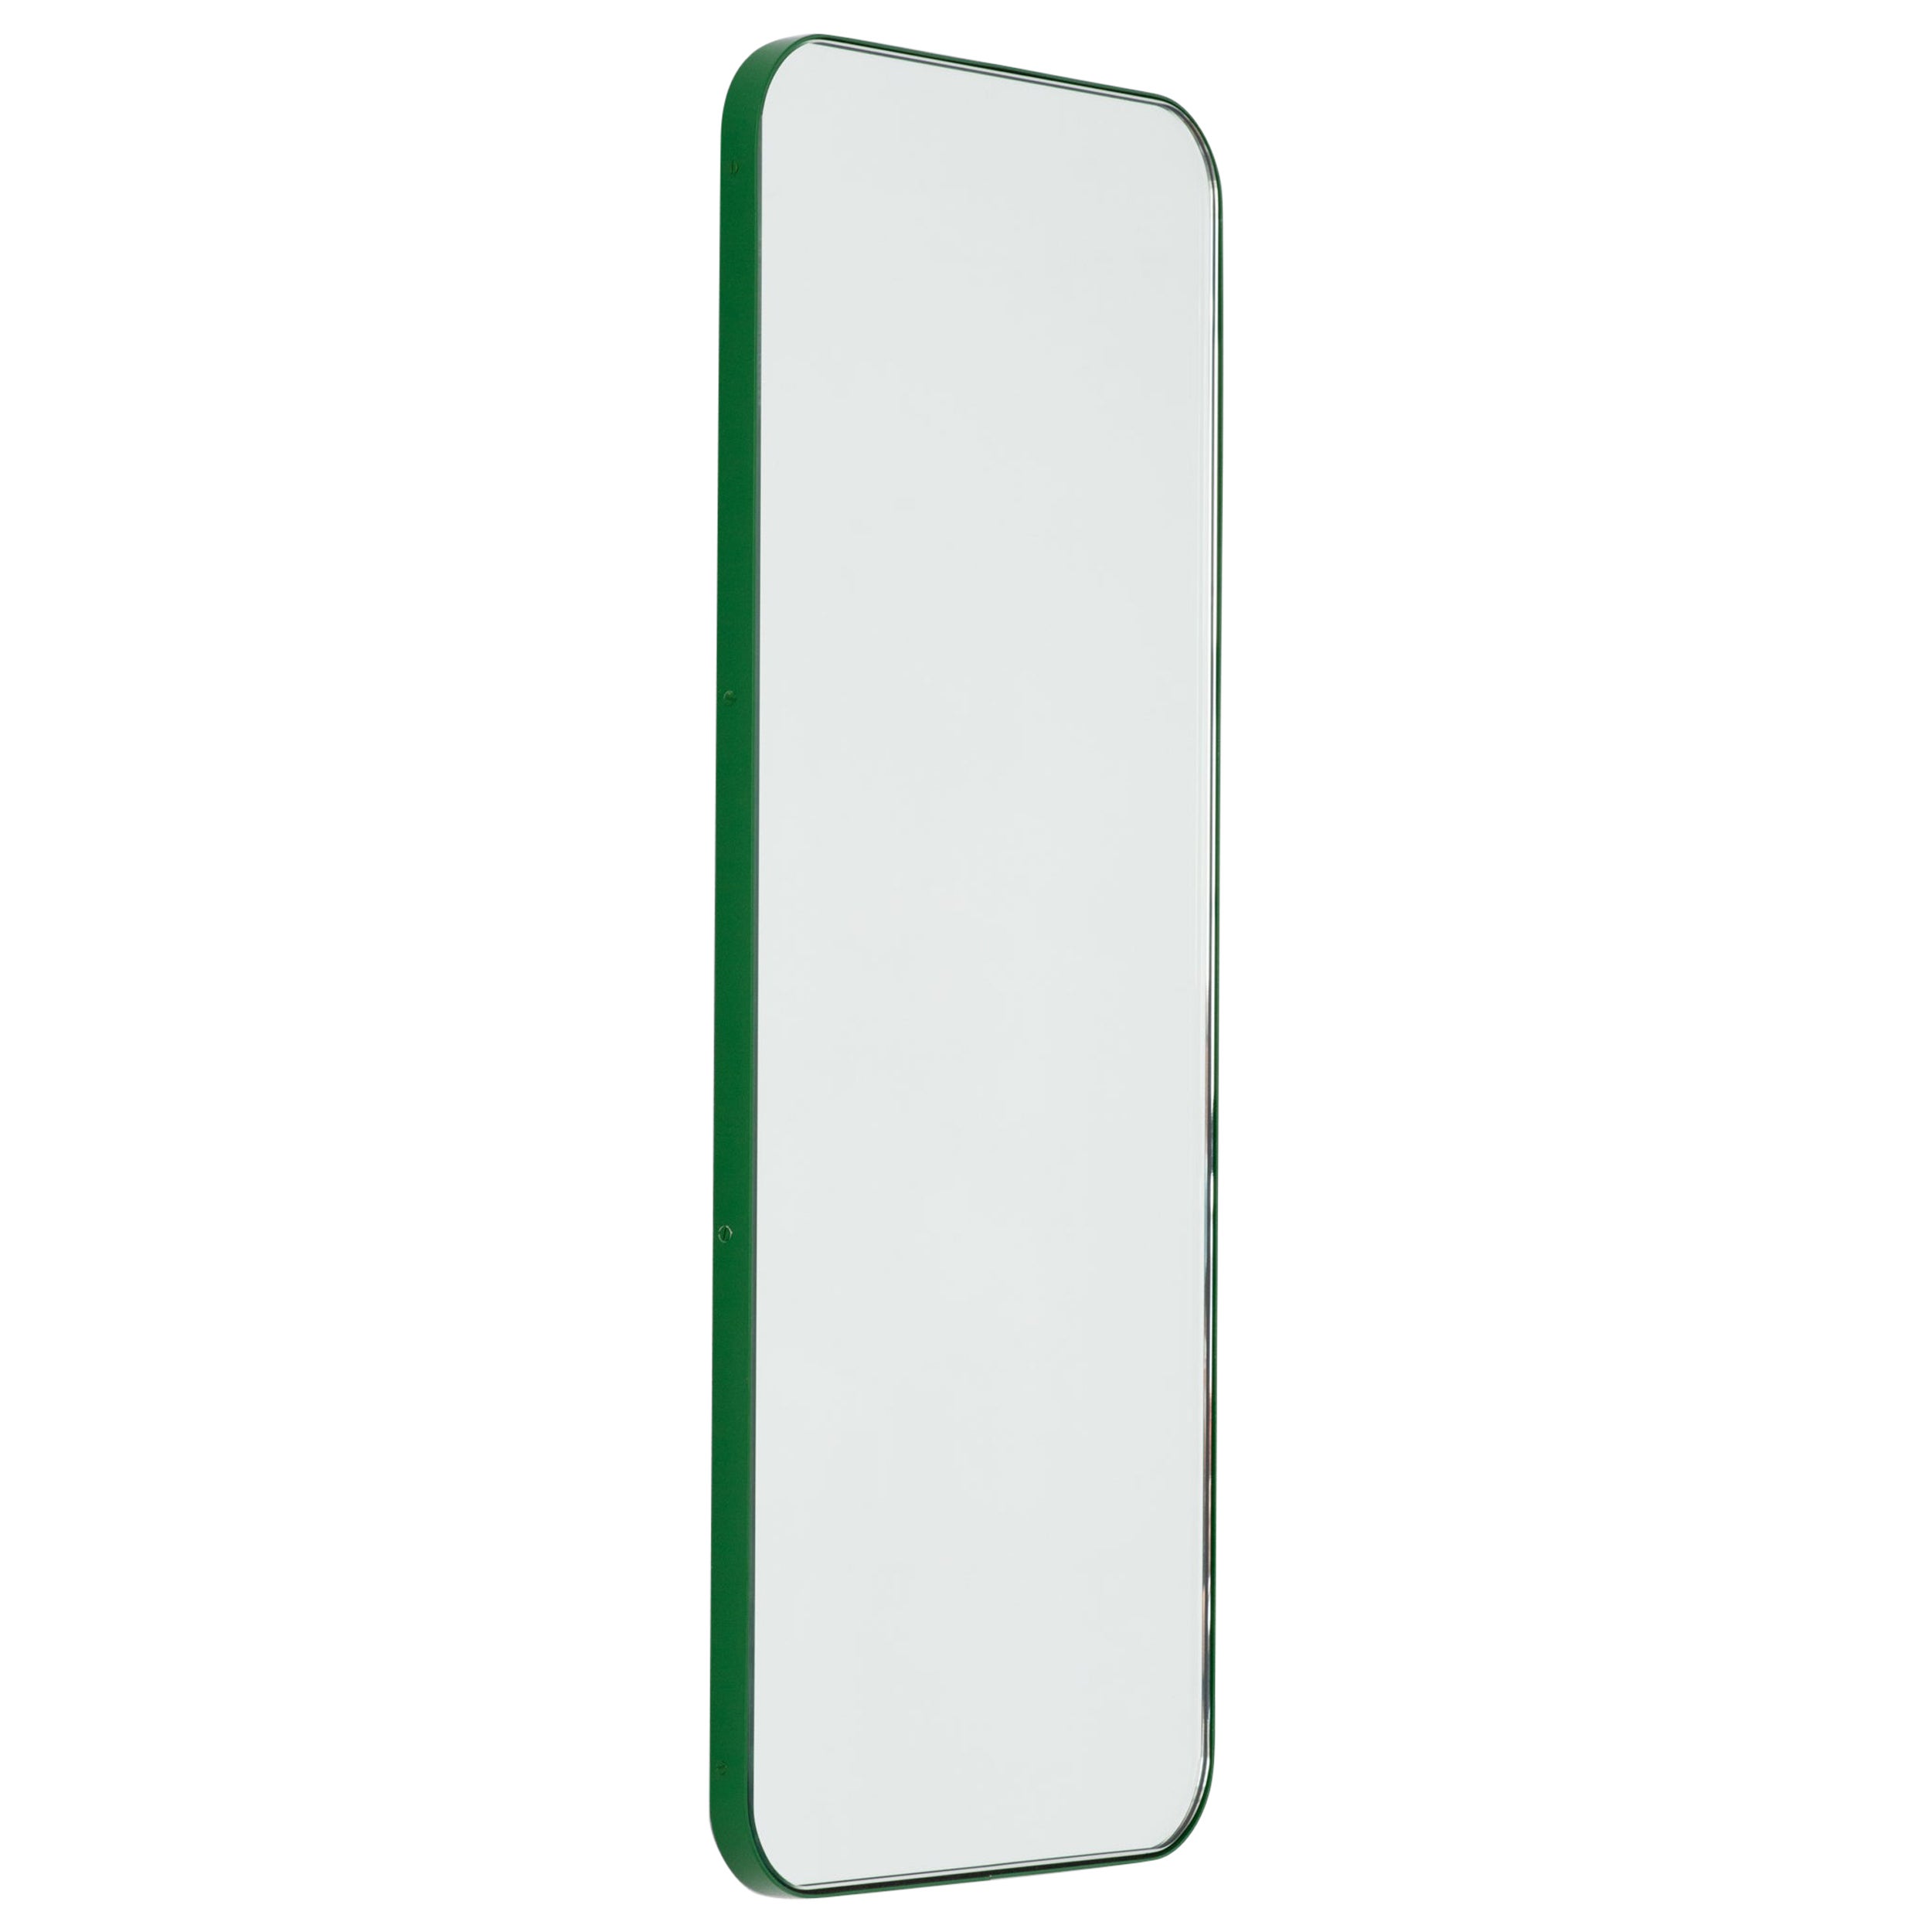 Quadris Rectangular Minimalist Mirror with a Modern Green Frame, Medium For Sale